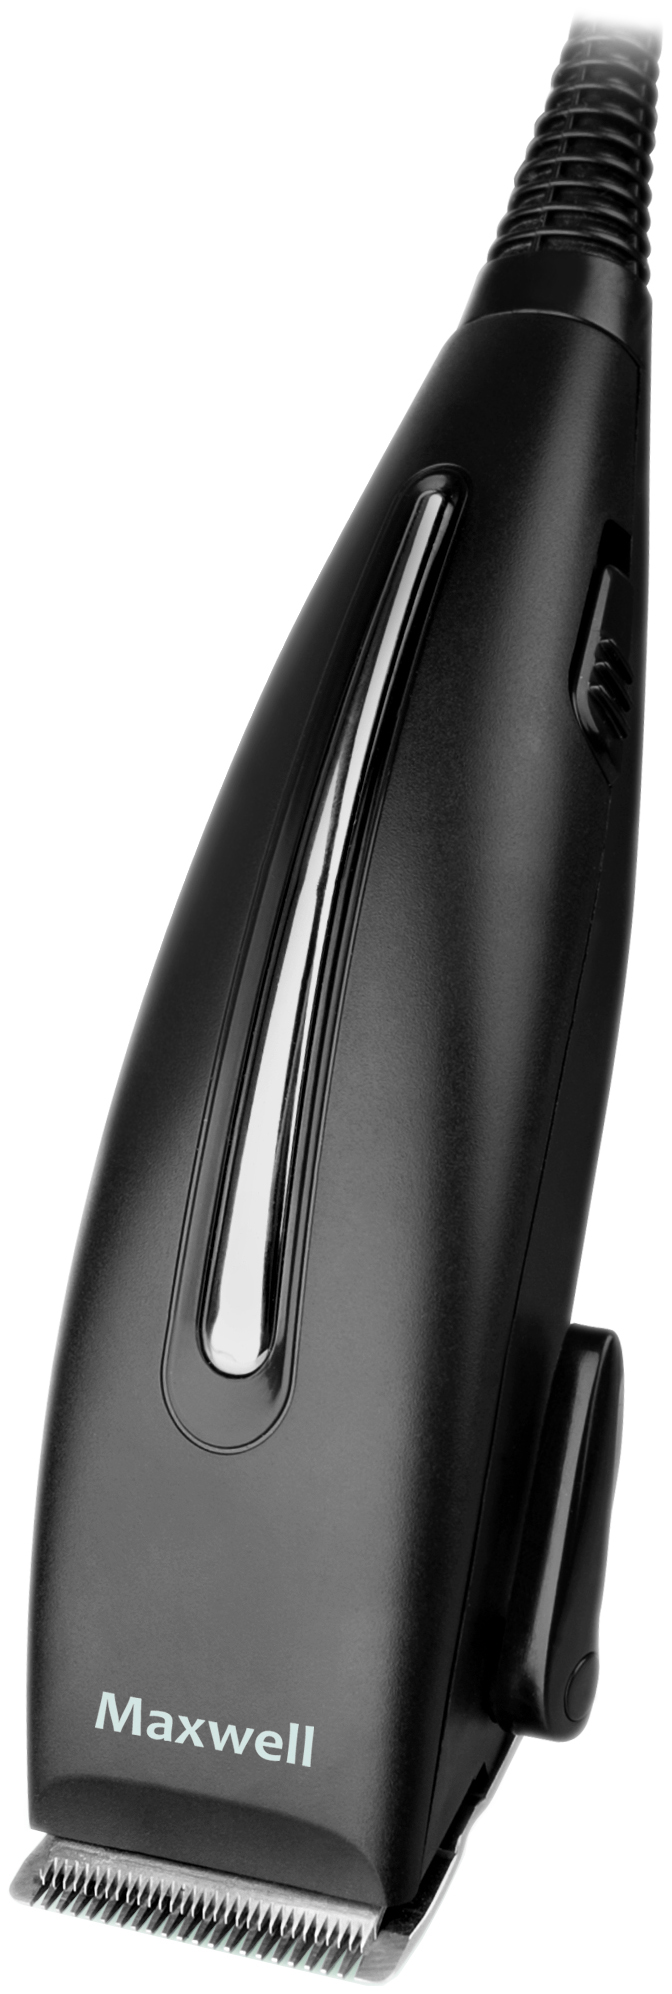 Машинка для стрижки волос Maxwell MW-2112 аппликация eva крошкой машинка